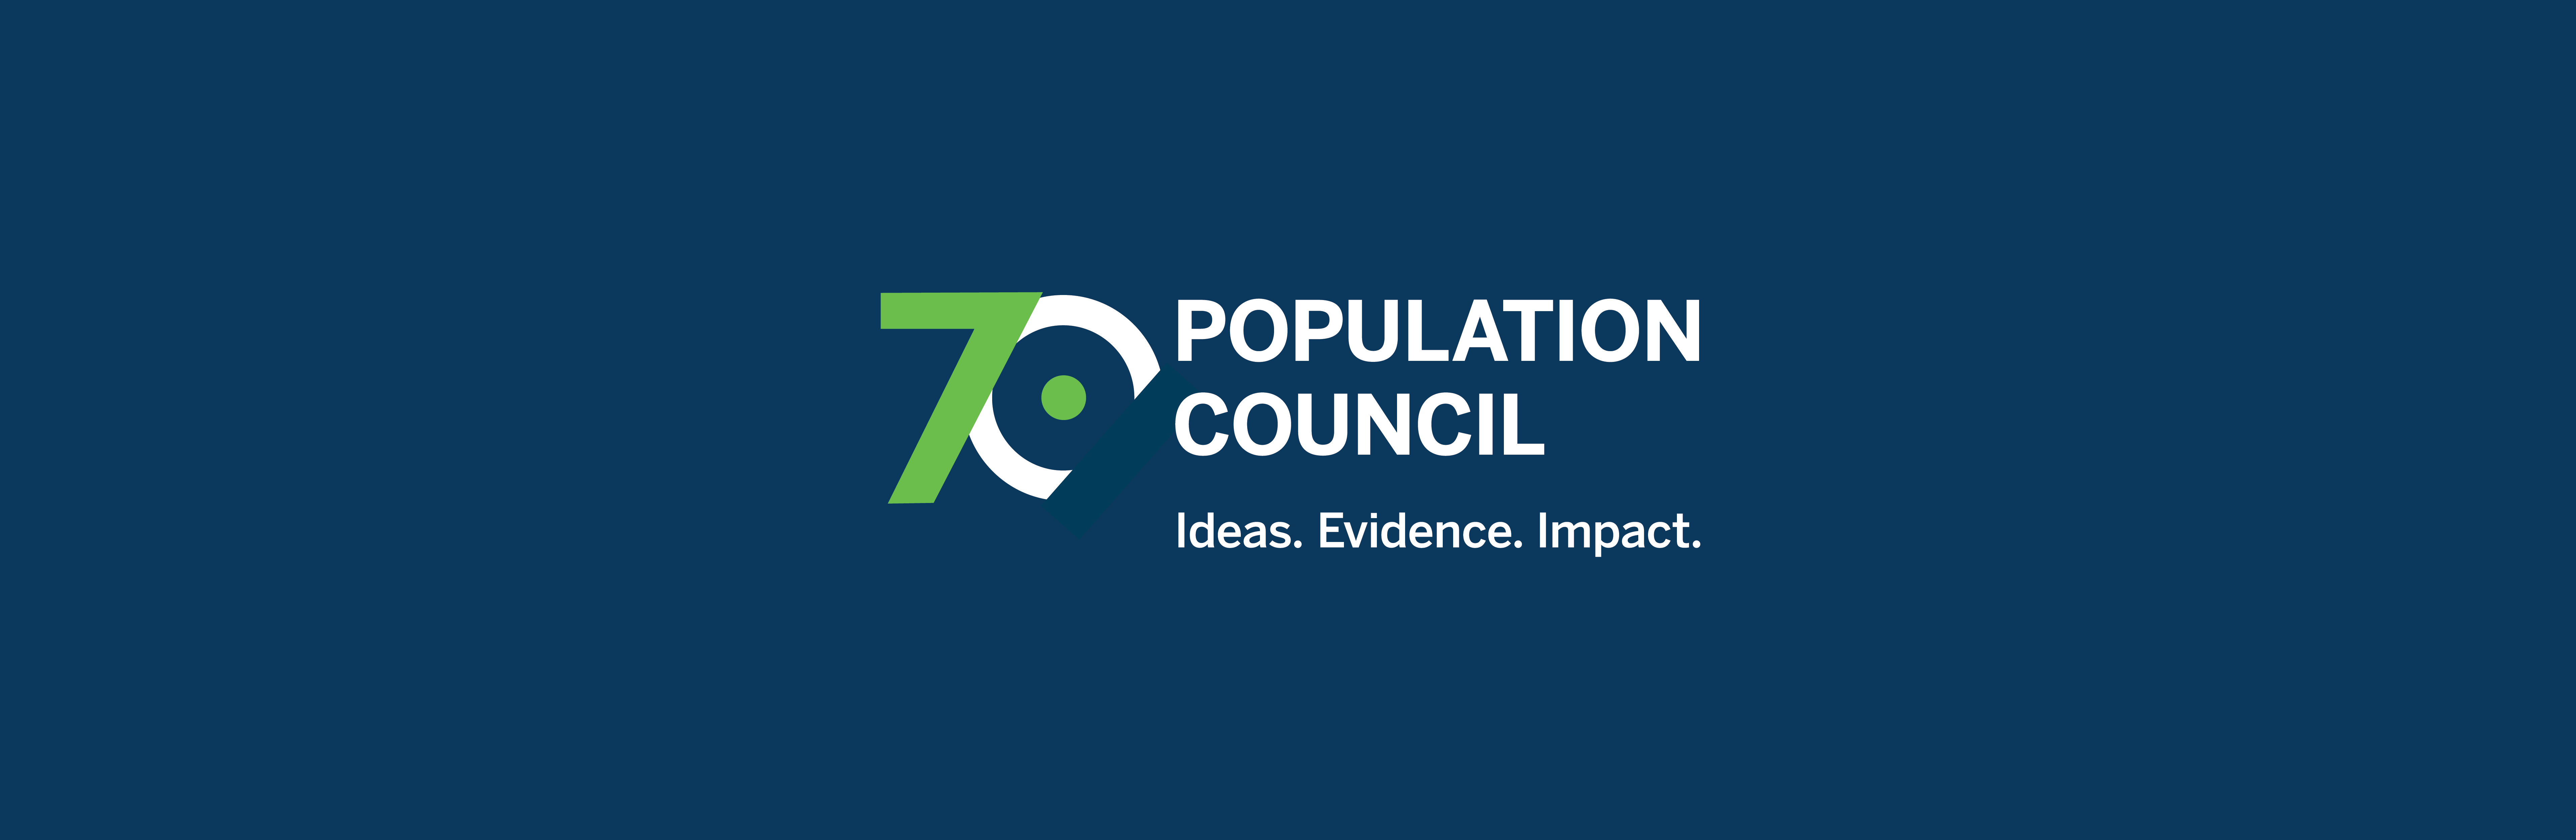 Population Council 70th Anniversary logo